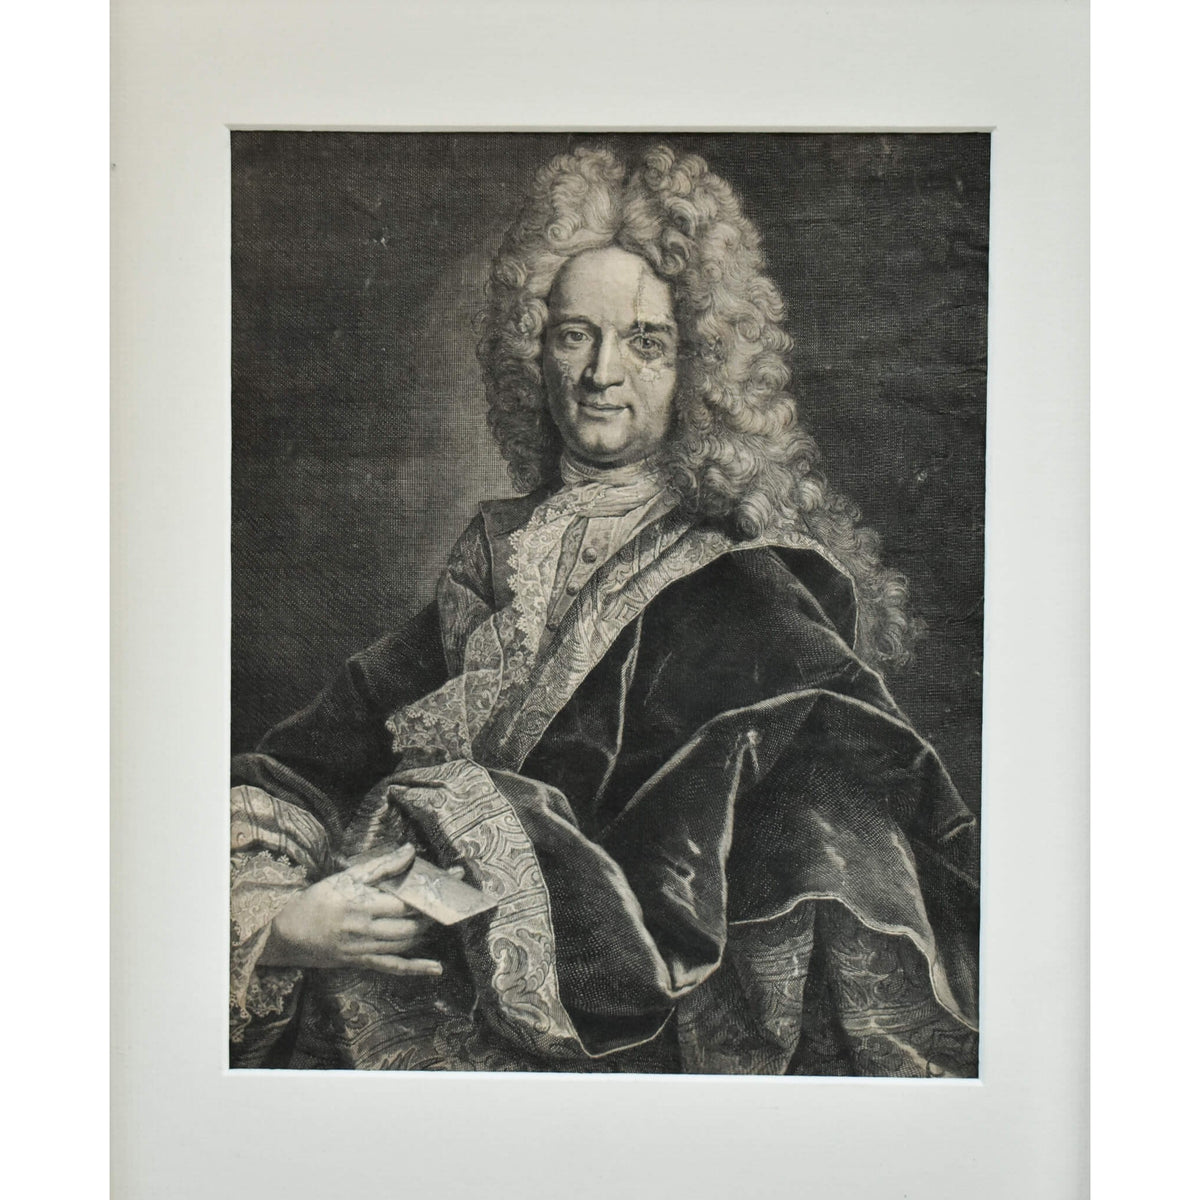 Original antique engraving portrait of a gentleman after Nicolas de Largilliere, circa 1700, for sale at Winckelmann Gallery